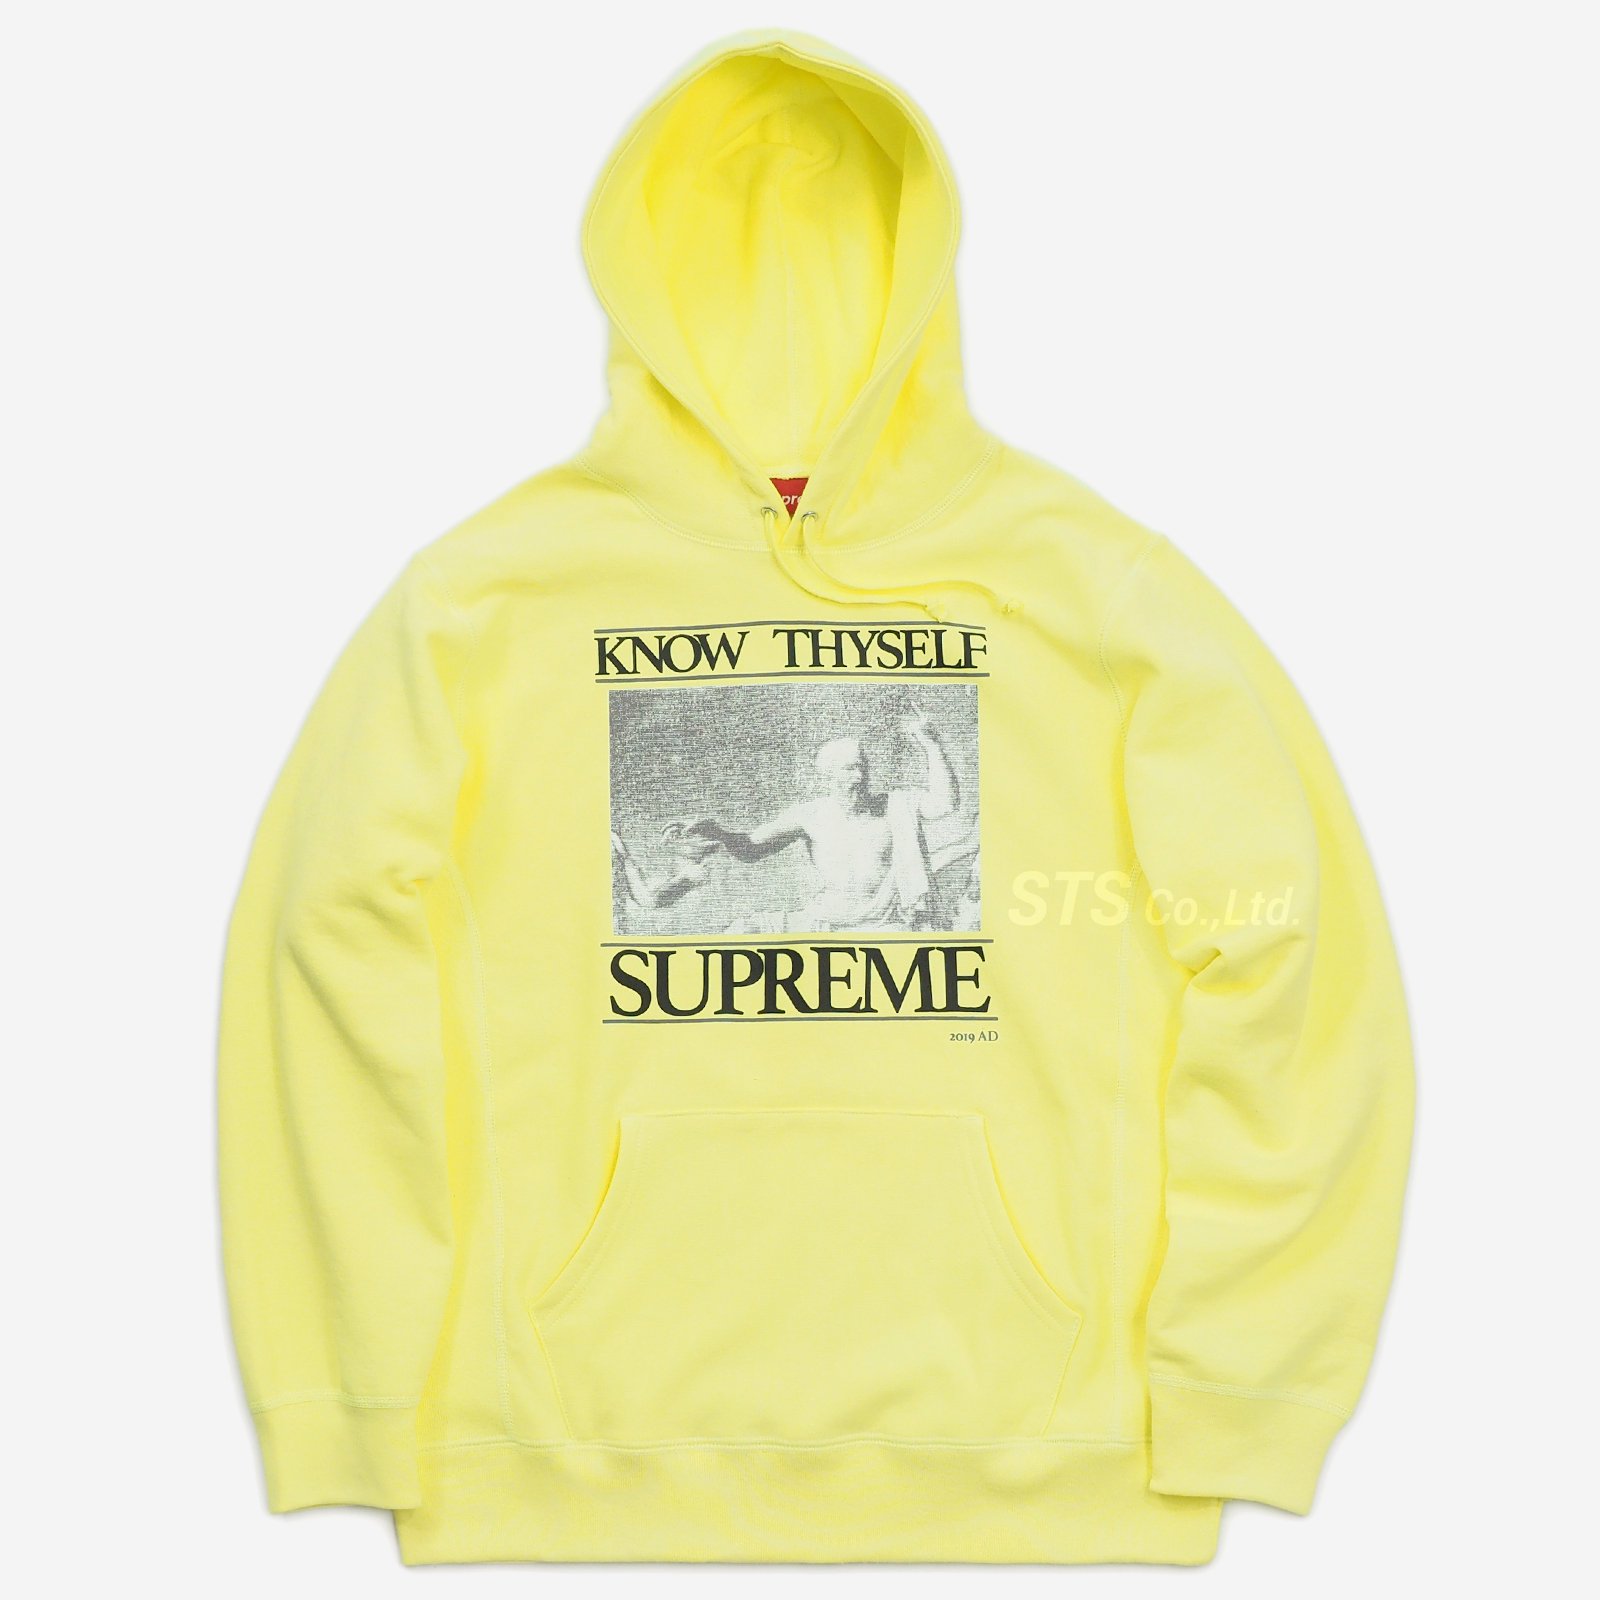 Supreme - Know Thyself Hooded Sweatshirt - UG.SHAFT